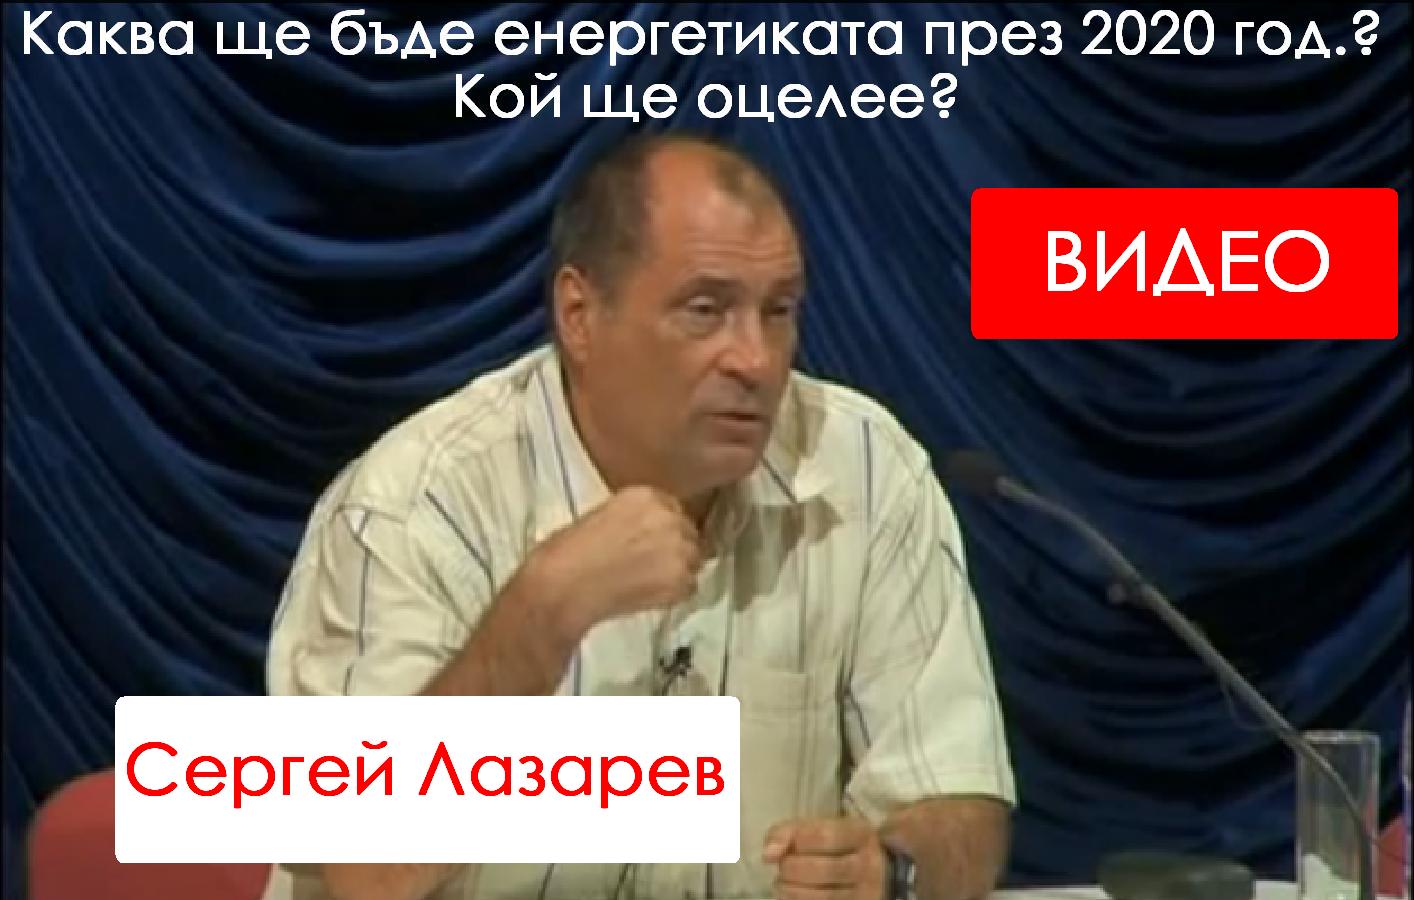 Сергей Лазарев видео енергетика 2020 година Sergei Lazarev videf